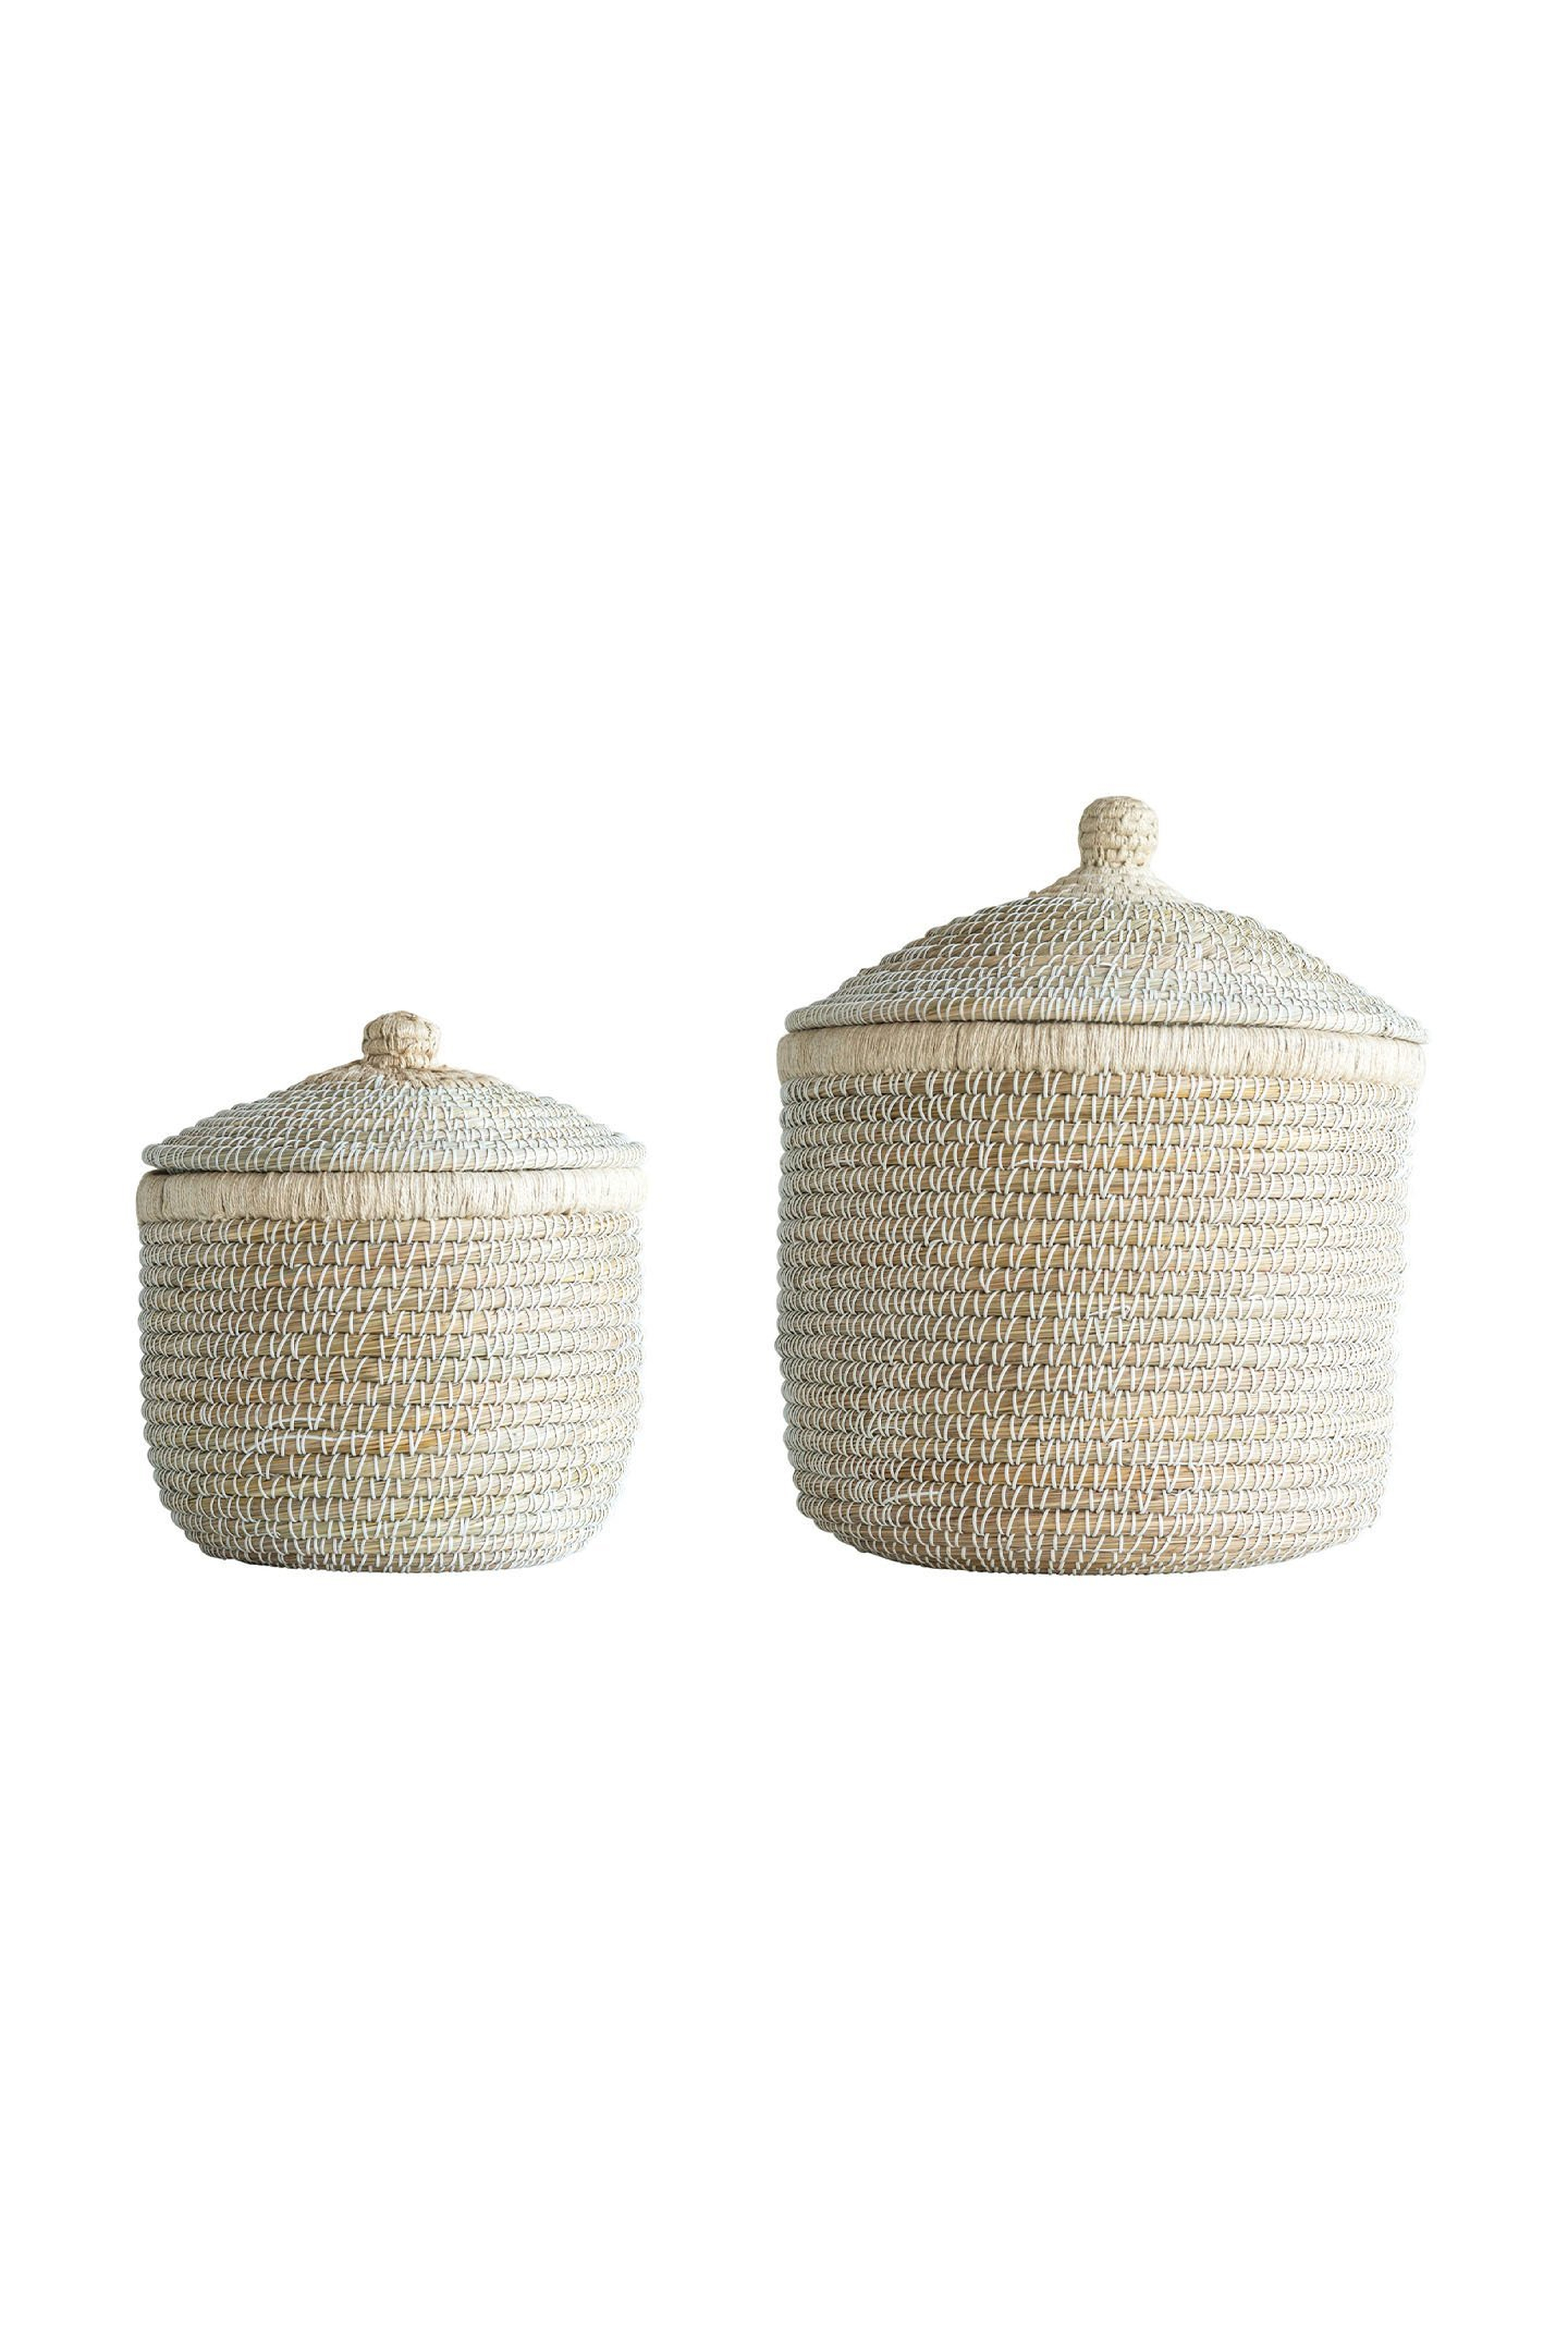 Lyla Baskets, Set of 2 - Cove Goods